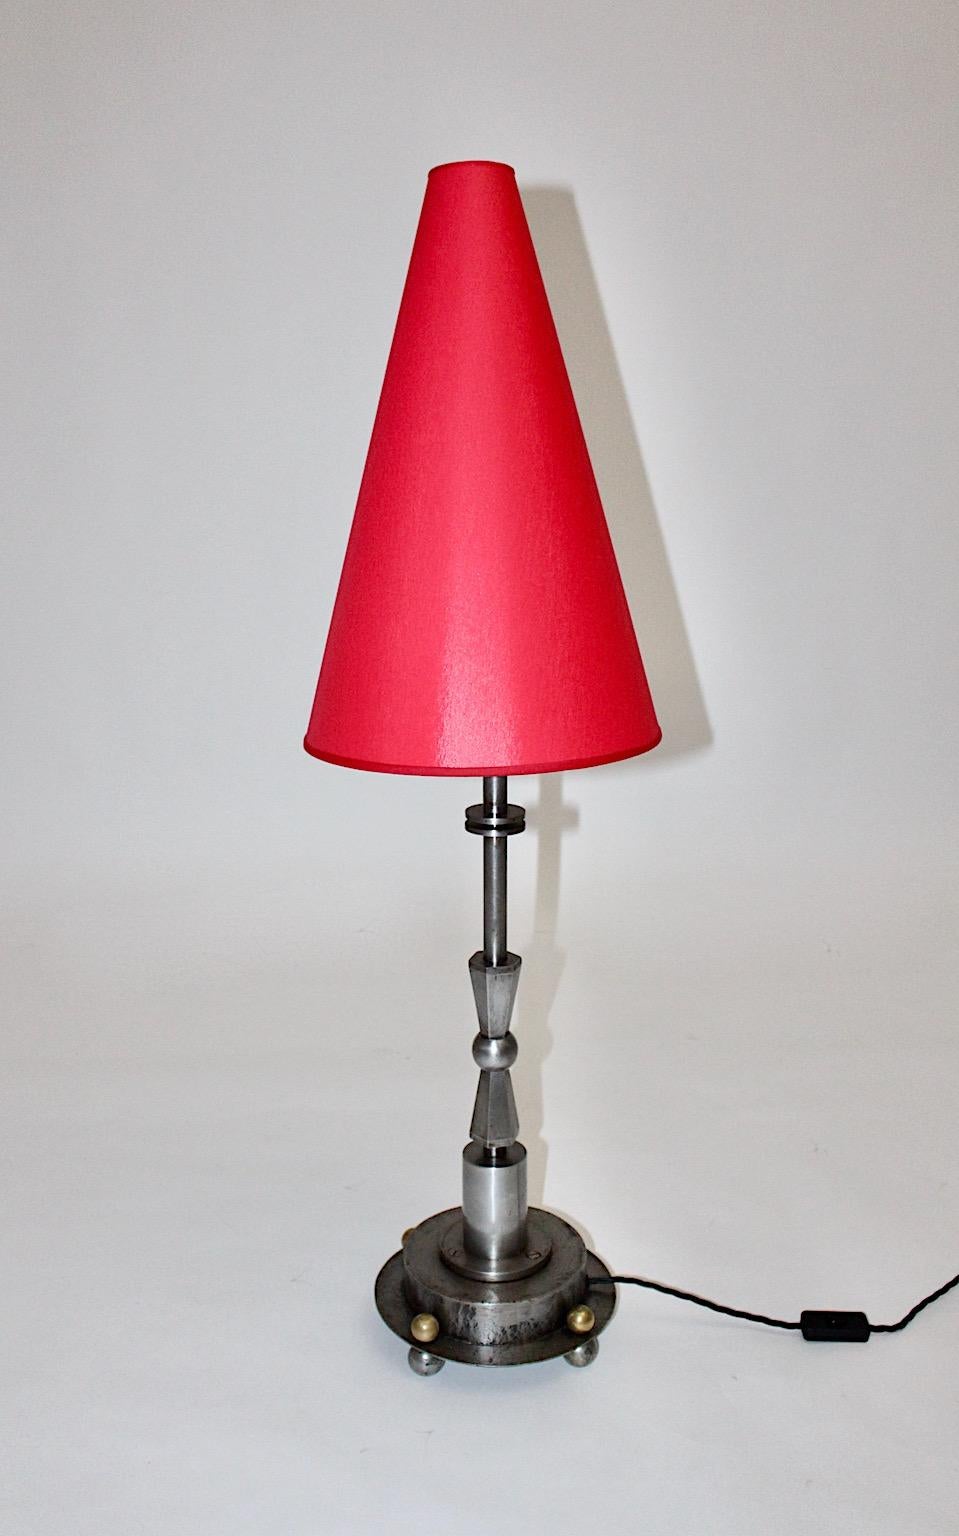 Austrian Art Deco Vintage Geometric Iron Brass Table Lamp, 1920s, Austria For Sale